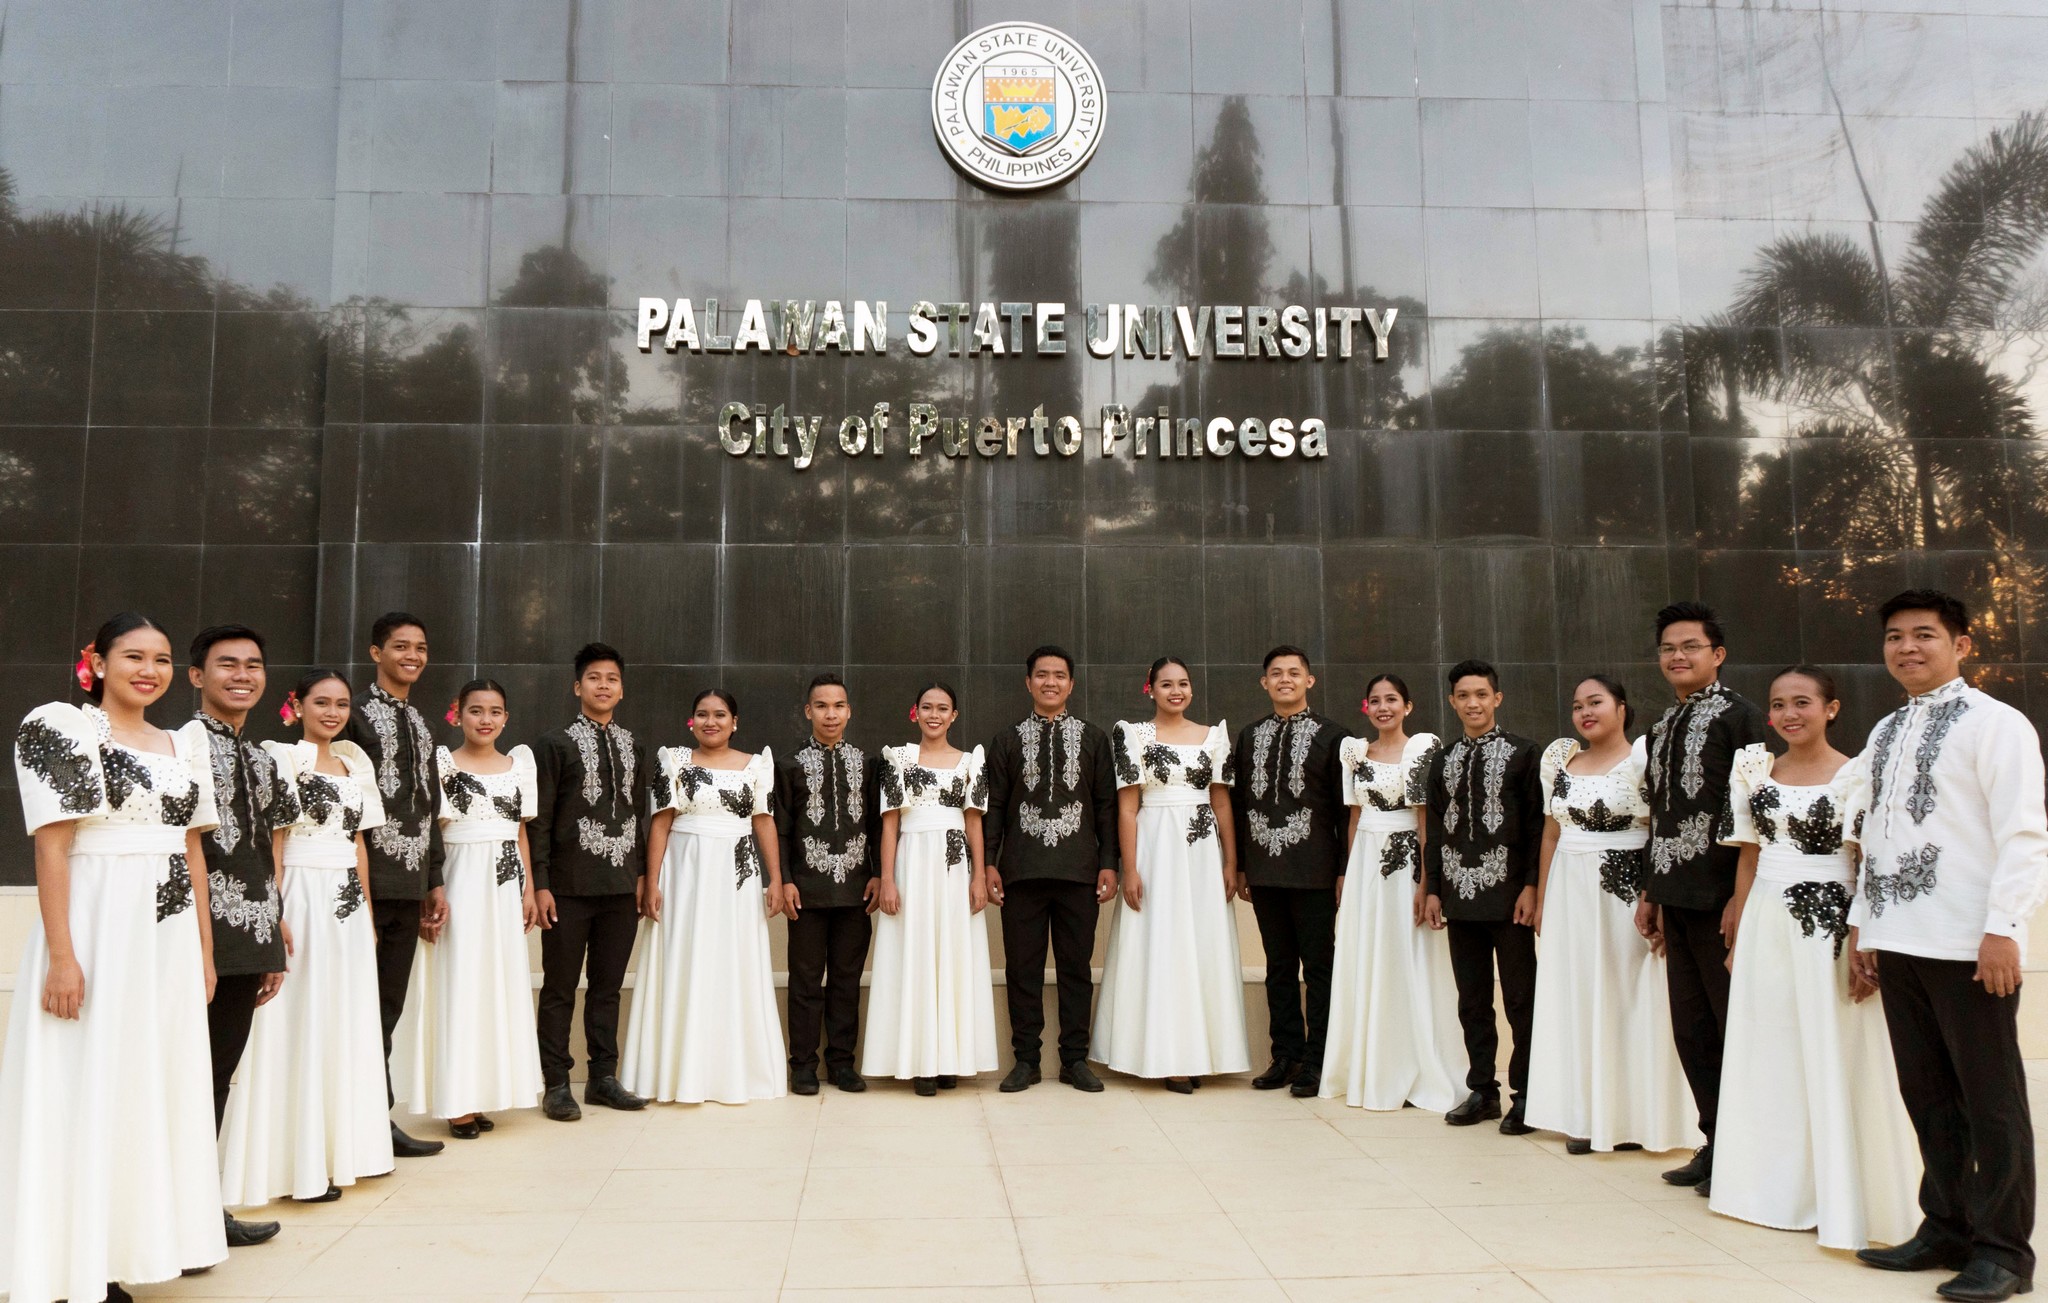 Chr Uniwersytetu Prowincji Palawan Filipiny